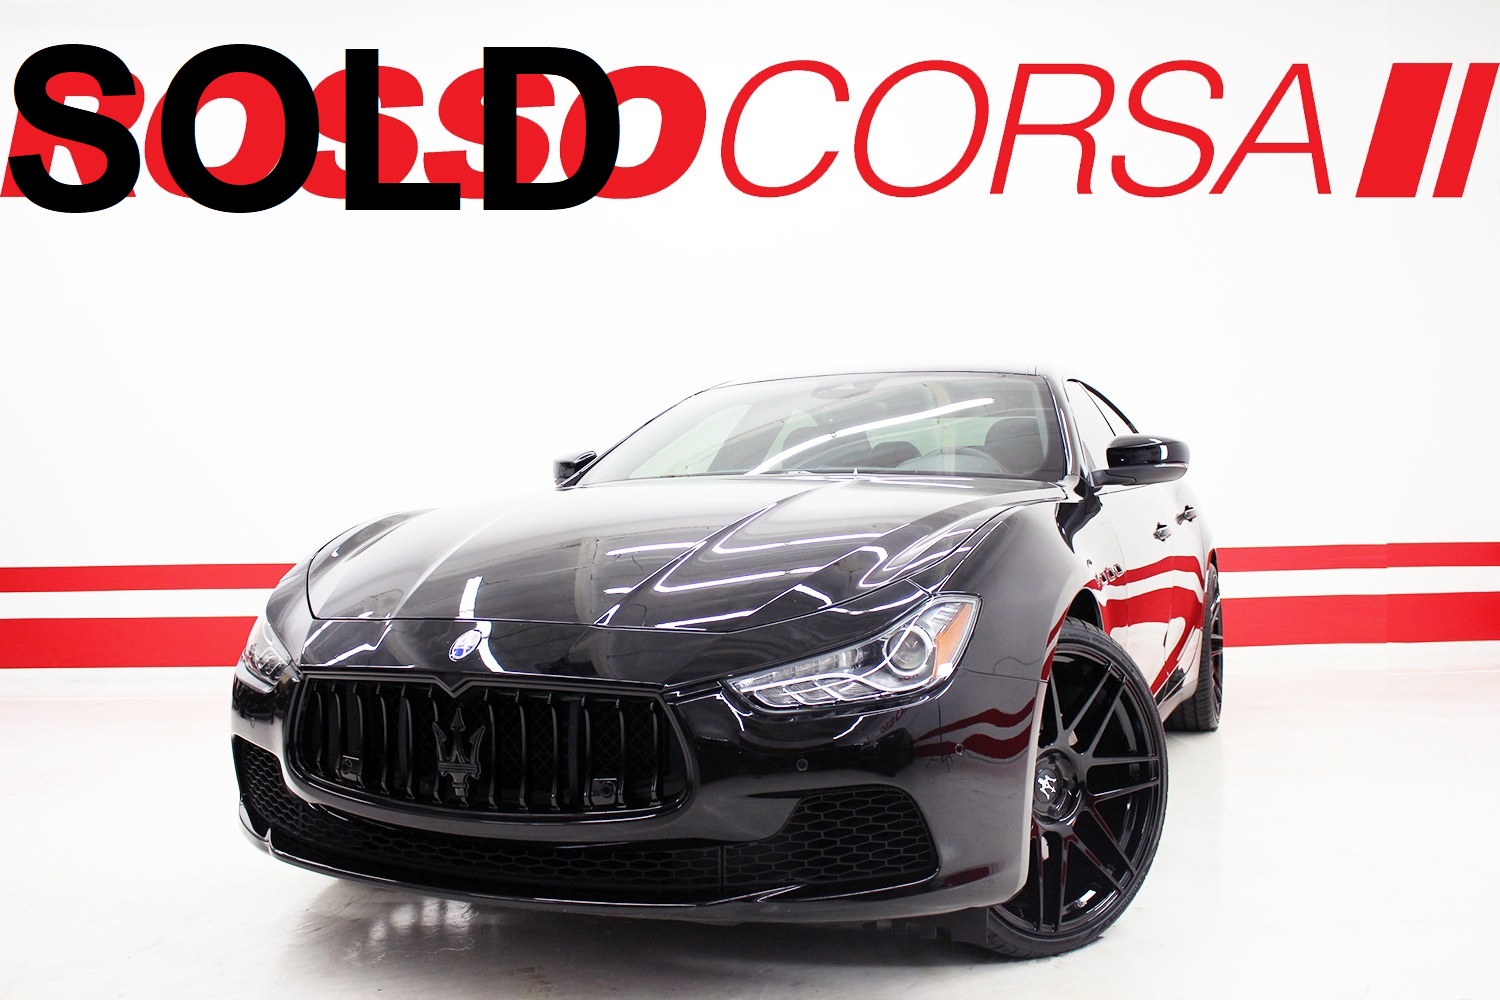 2017 Maserati Ghibli S Q4 Nerissimo Edition 1 / 450 - CUSTOM ($98K MSRP)